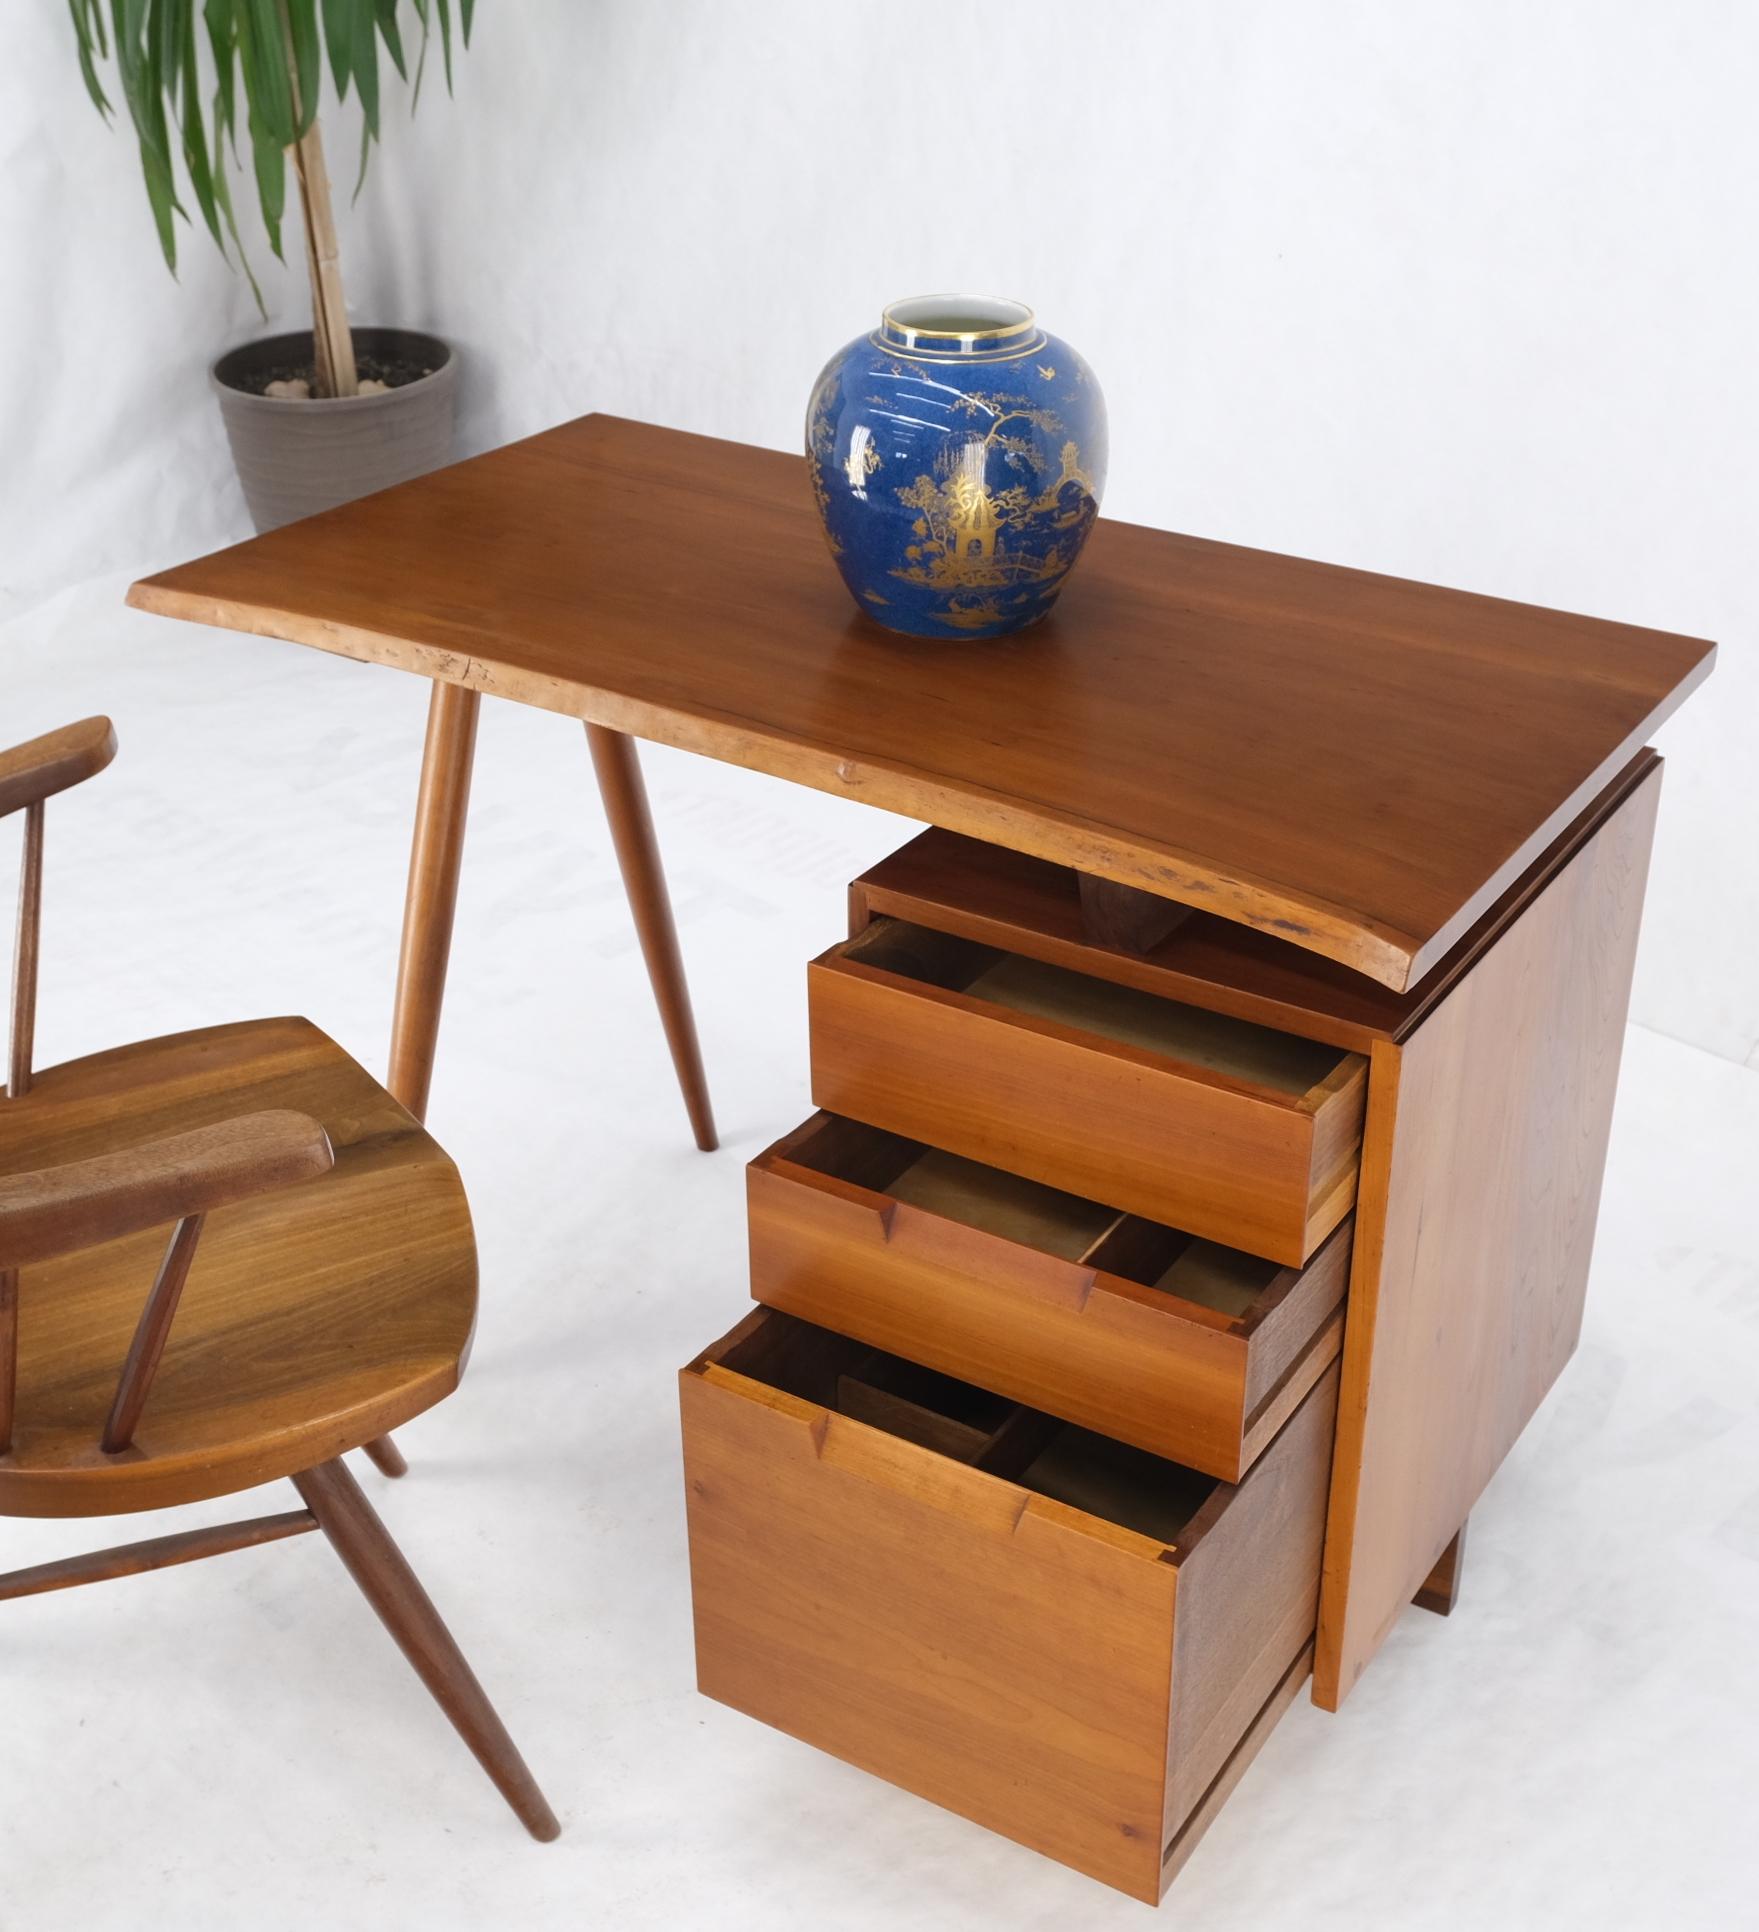 George Nakashima turned wood dowel shape leg single pedestal small desk mint with documents.